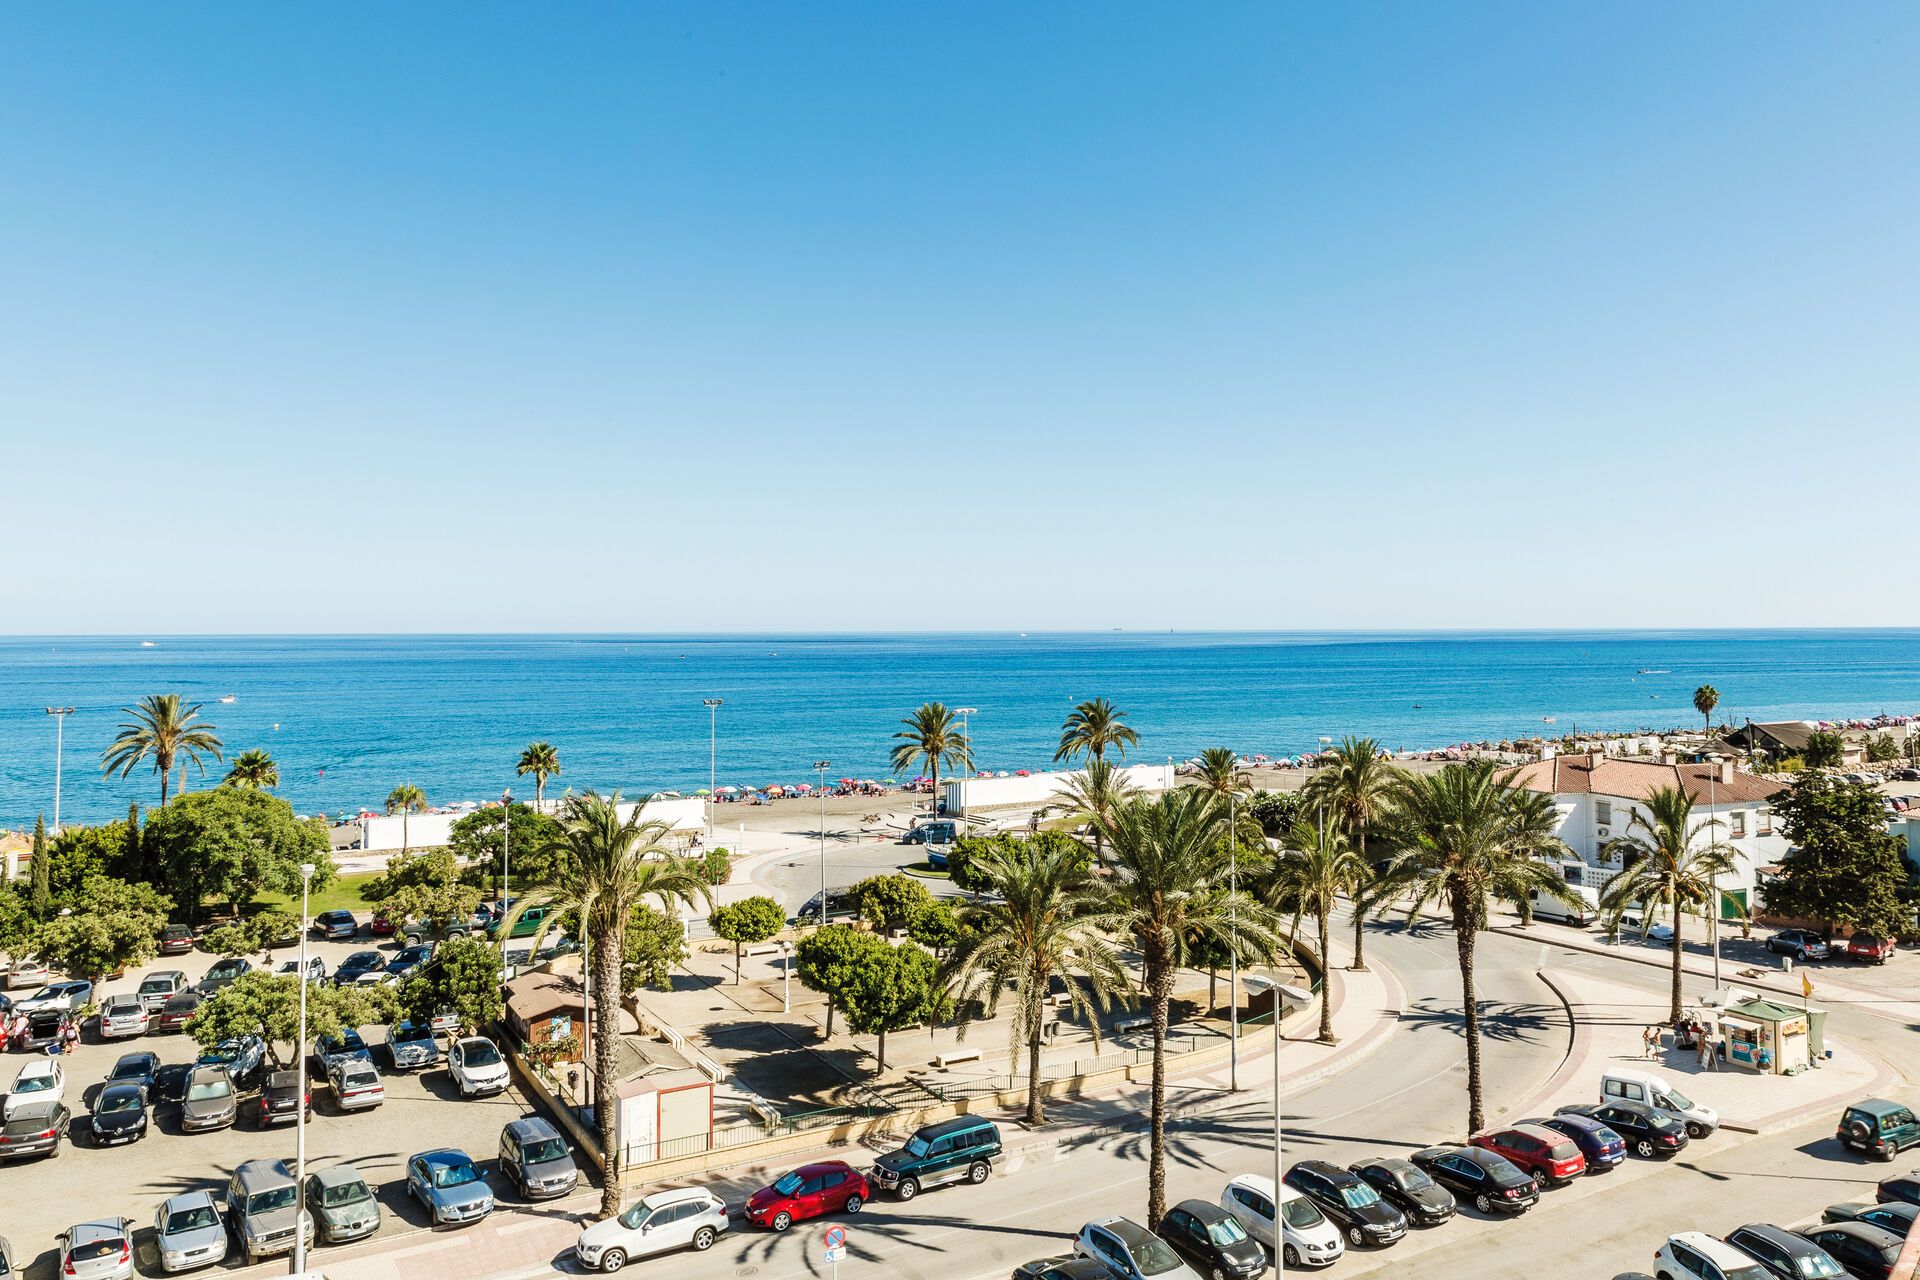 Espagne - Andalousie - Torre del Mar - Hotel BQ Andalucia Beach 4*